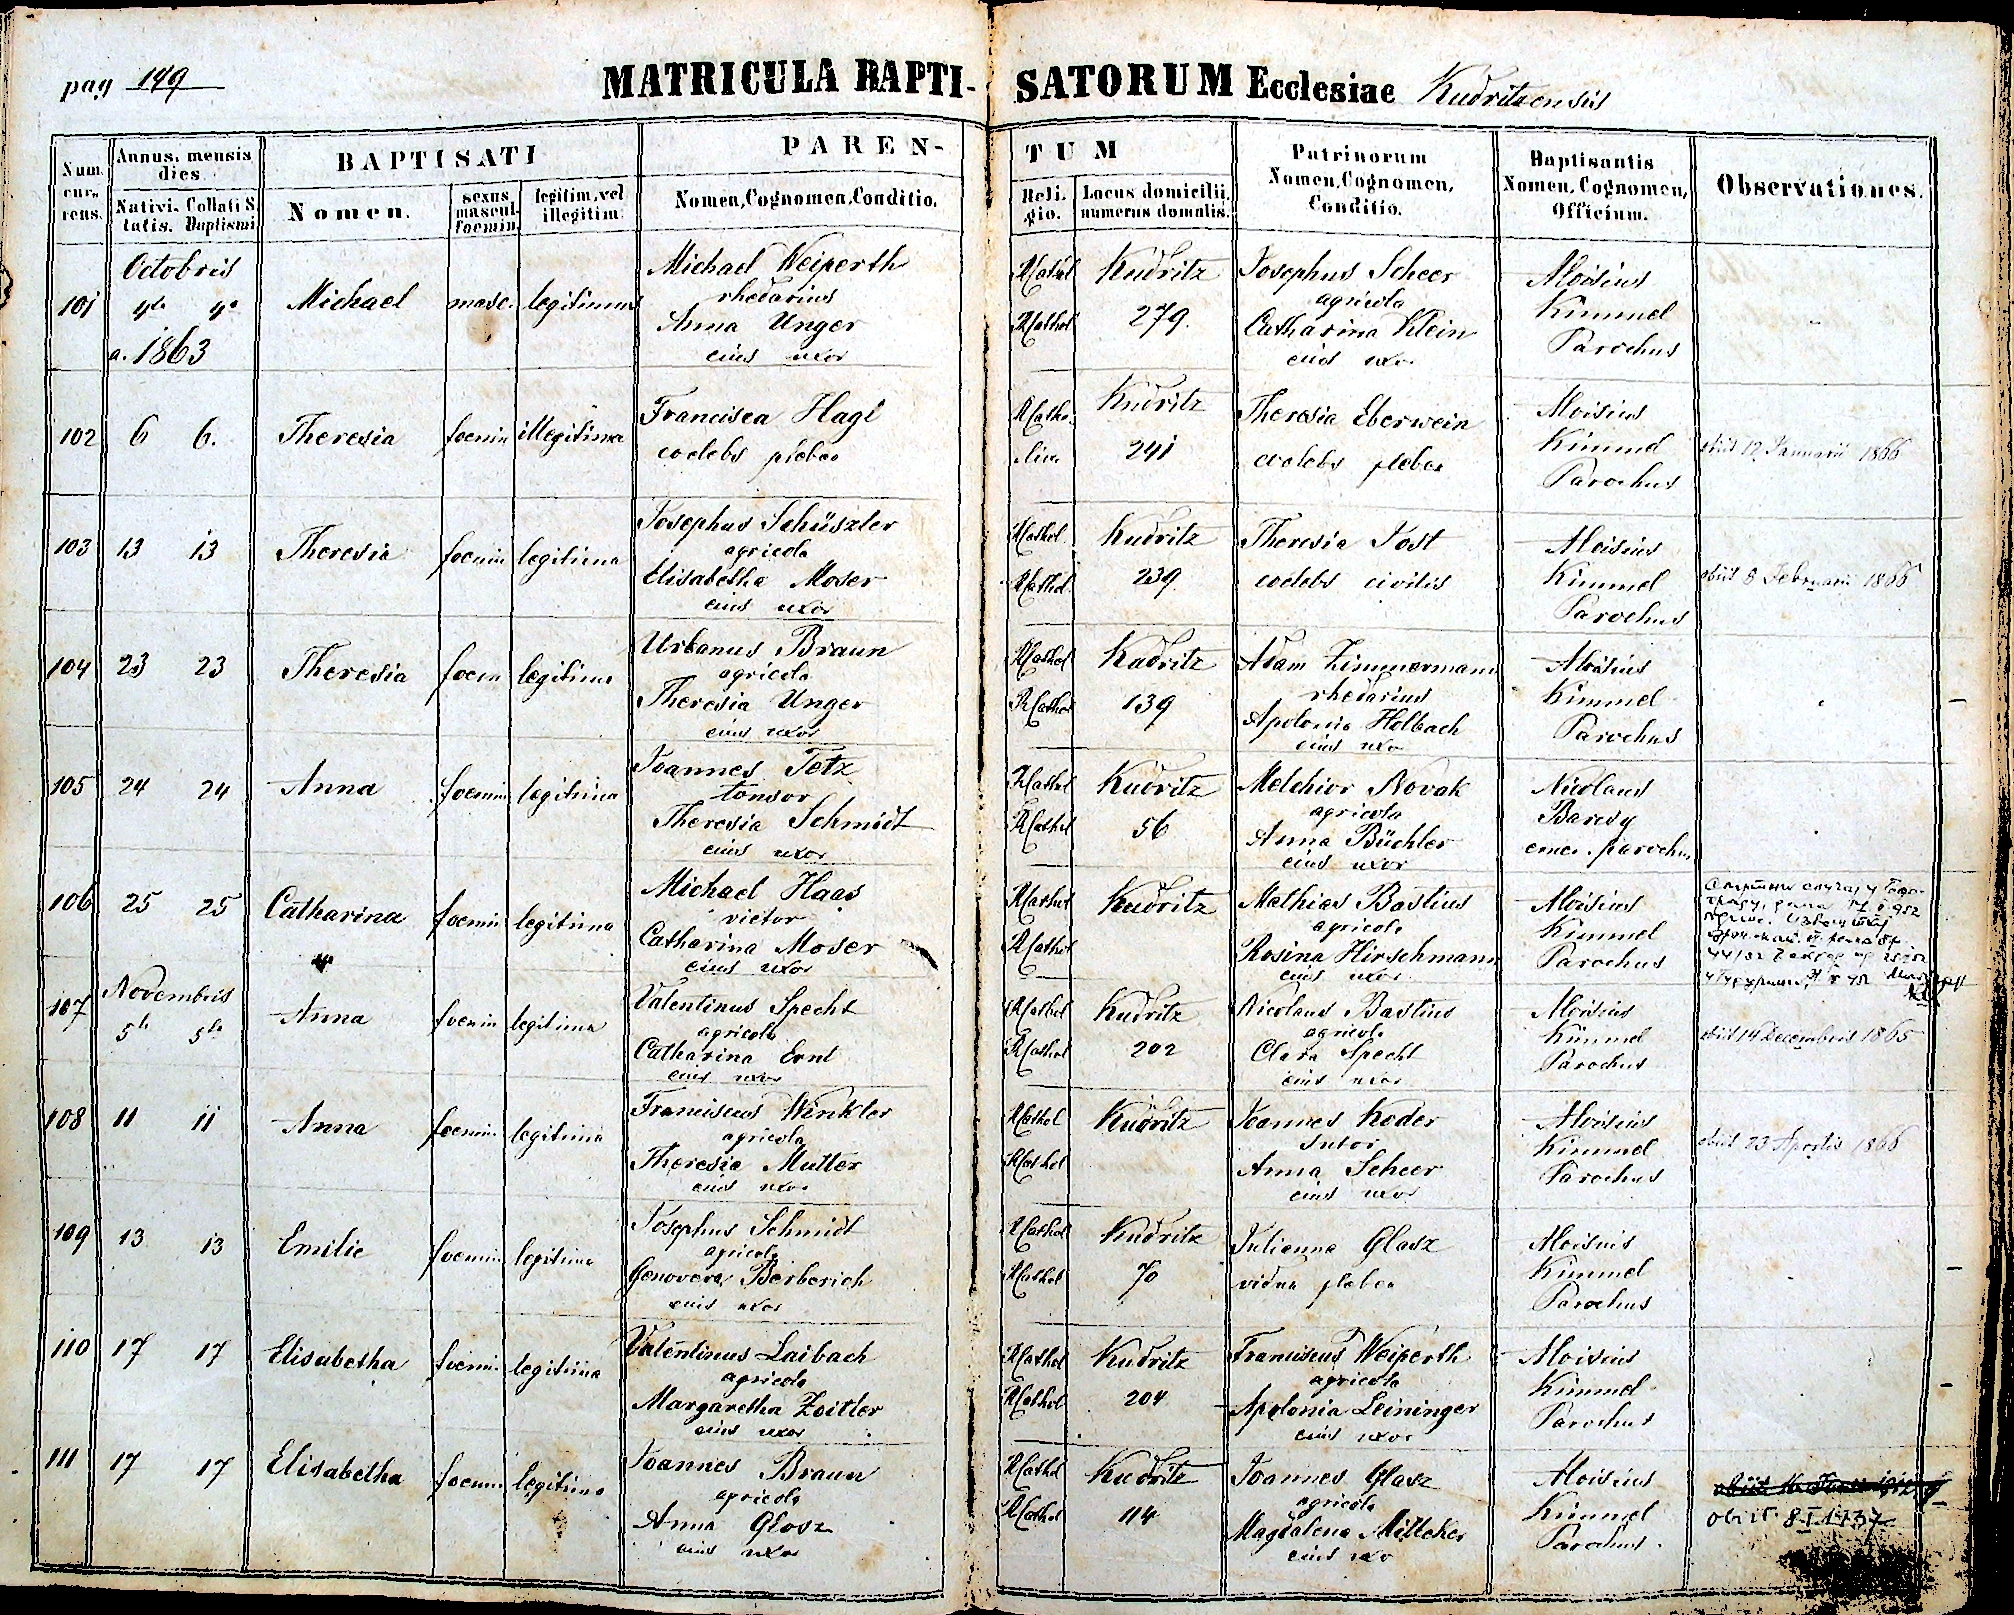 images/church_records/BIRTHS/1852-1870B/149